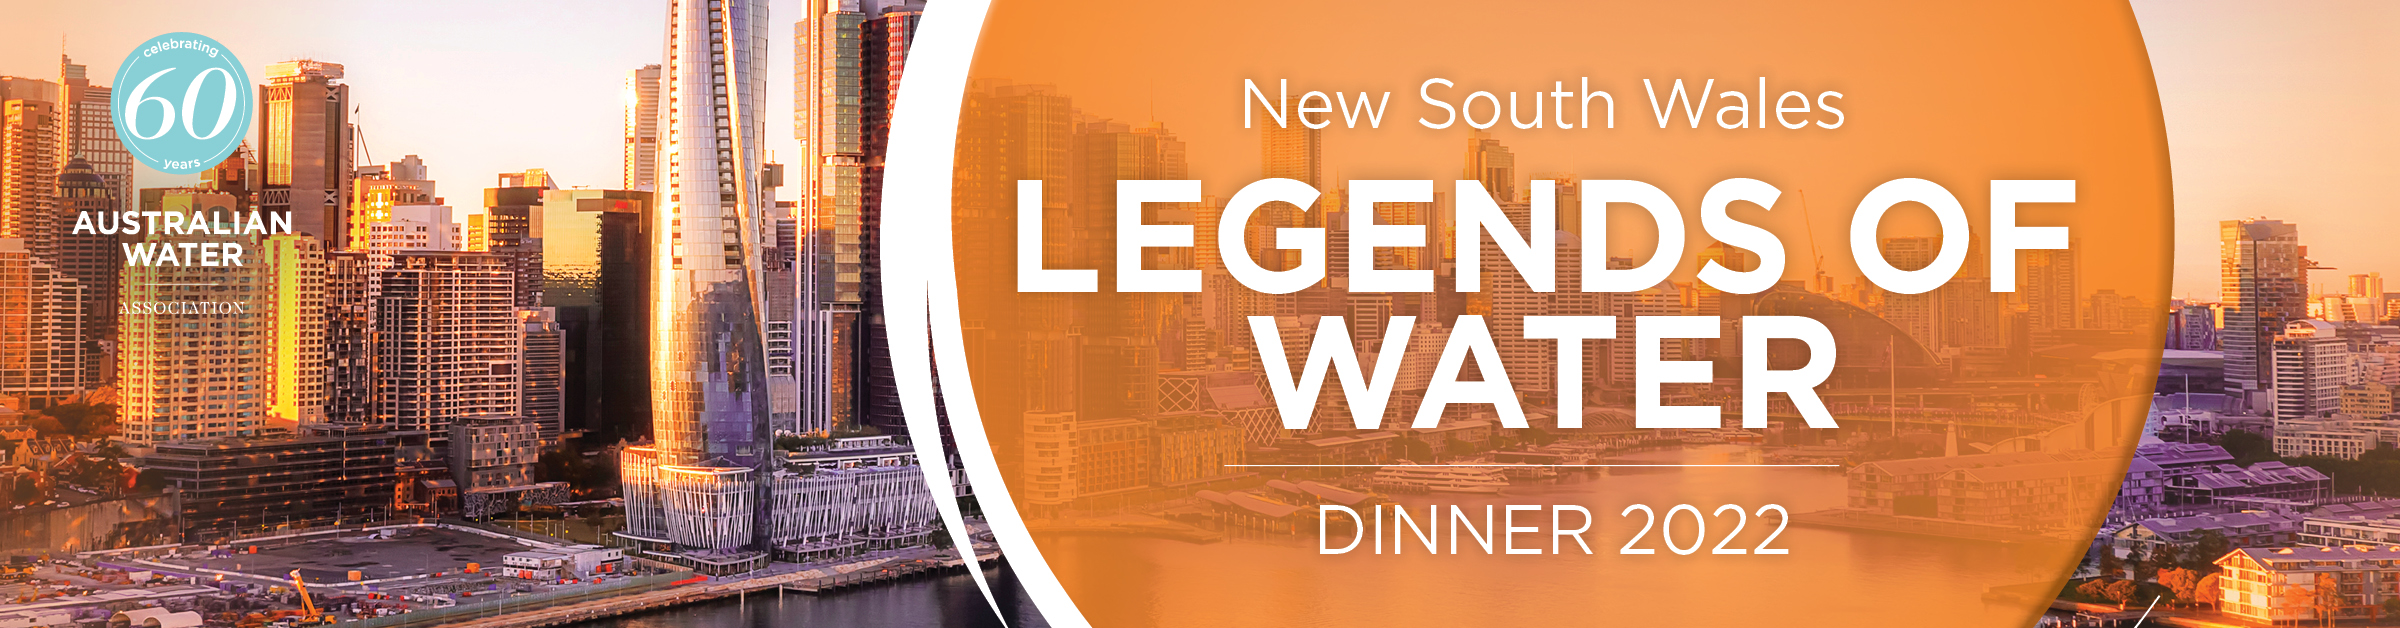 NSW Legends of Wate_HubSpot Event Banner 1200x314px